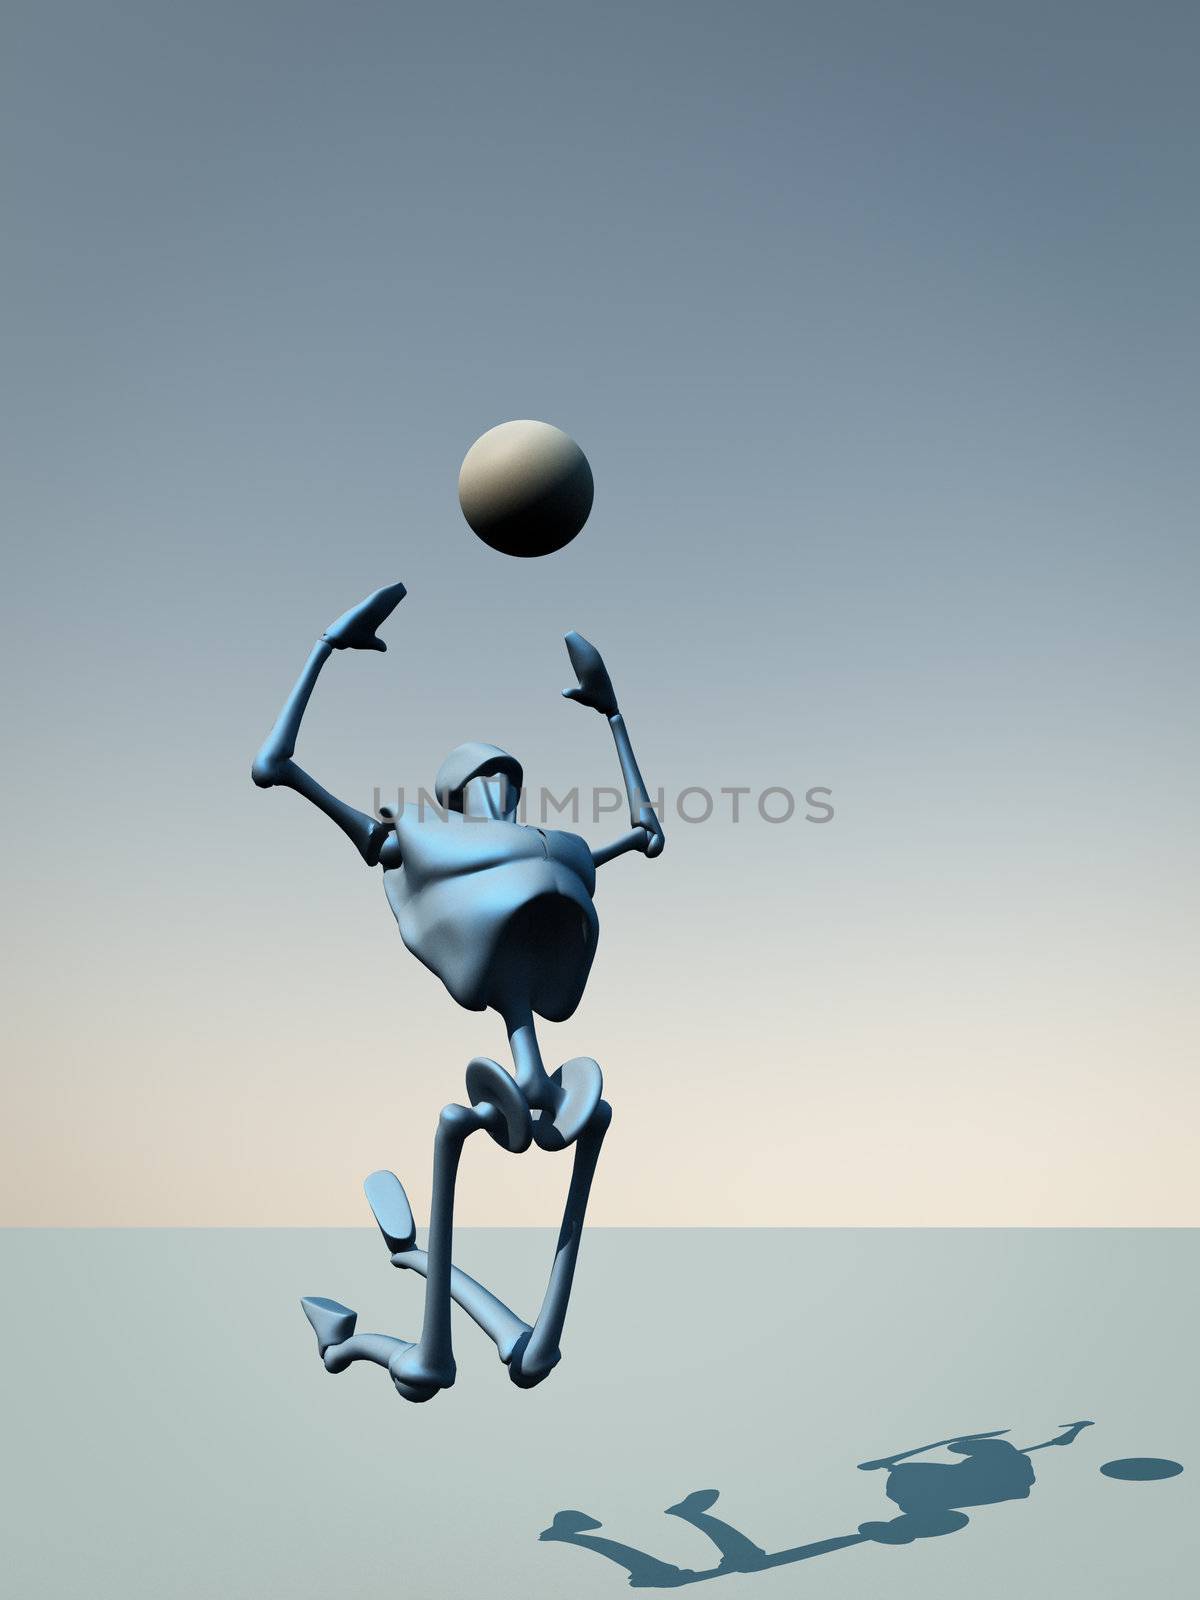 A robot jumping to catch a ball.